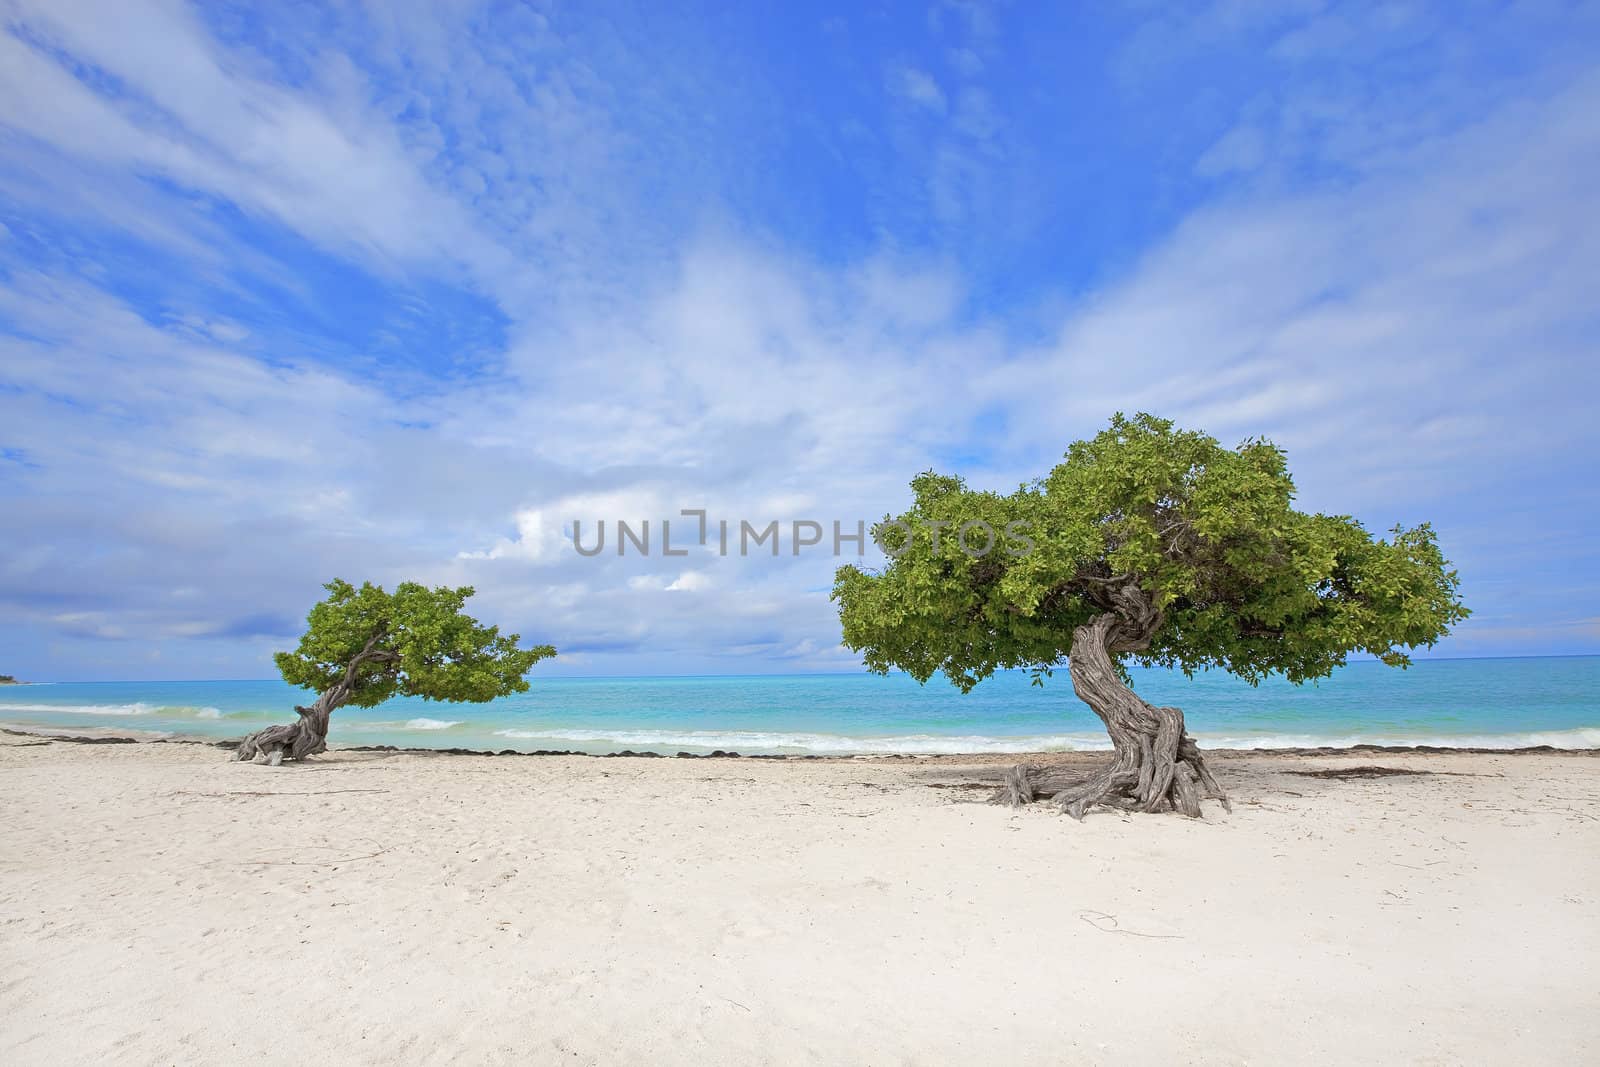 Divi divi tree on Eagle beach, Aruba 

